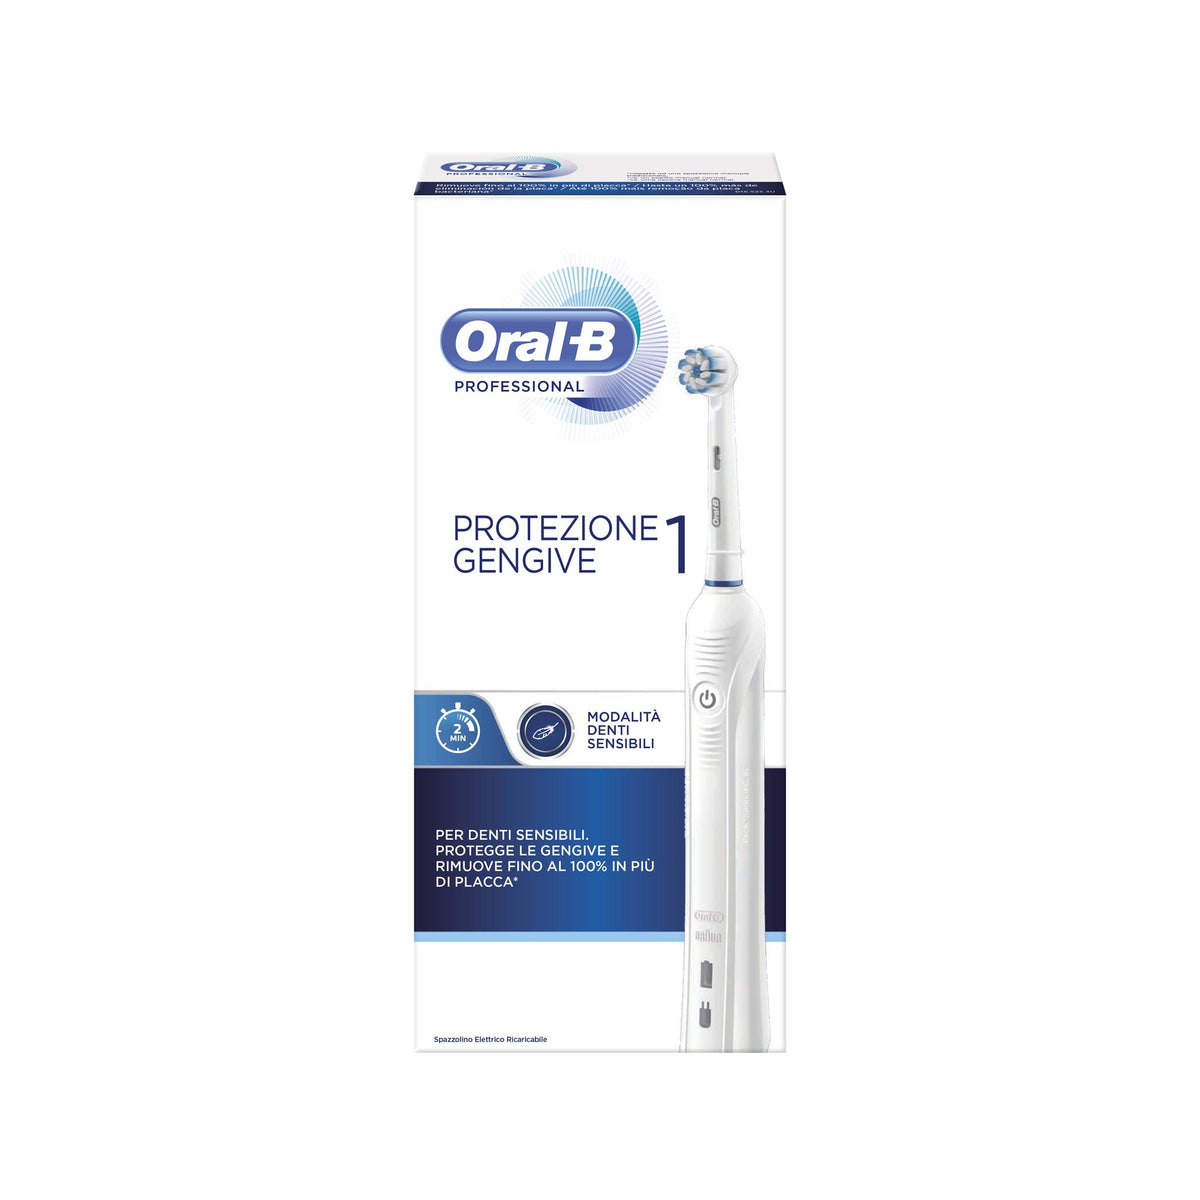 Oral B Professional Power Pro 1